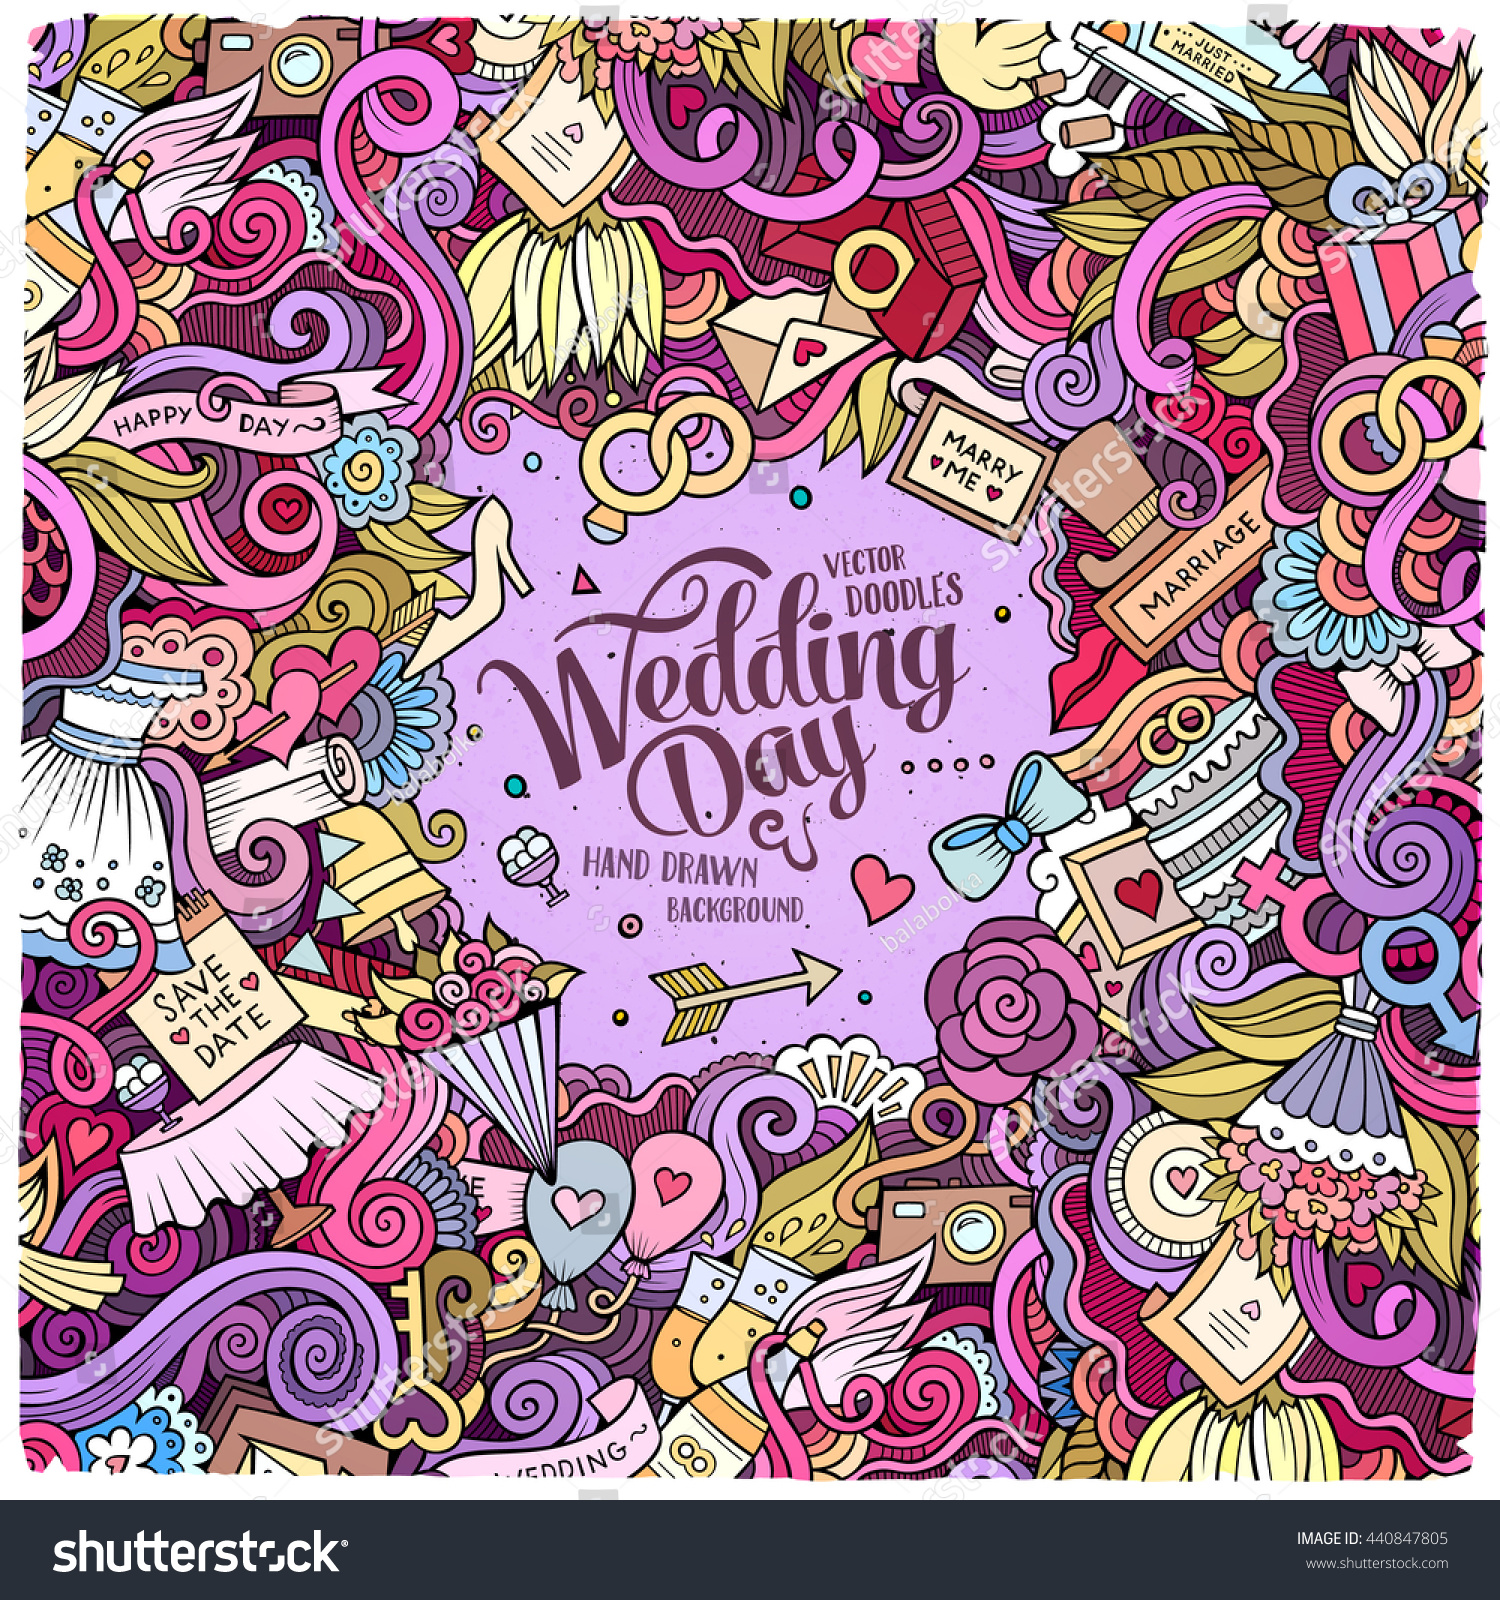 Cartoon Cute Doodles Hand Drawn Wedding Stock Vector Royalty Free